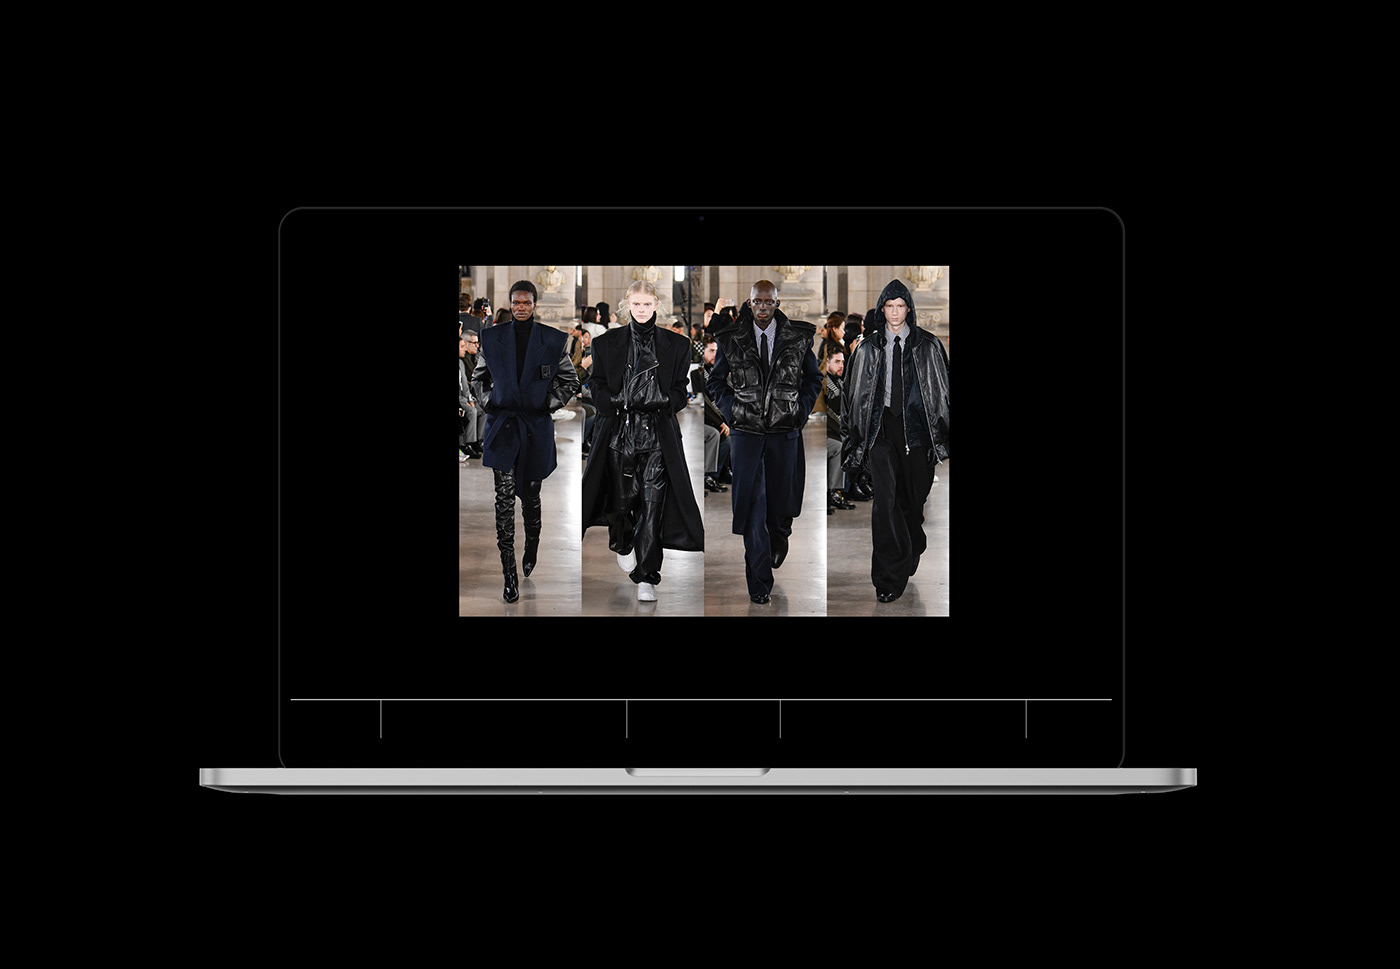 black dark ui Fashion  juun j korean luxury ui/ ux user interface Web Design  Website upgrade